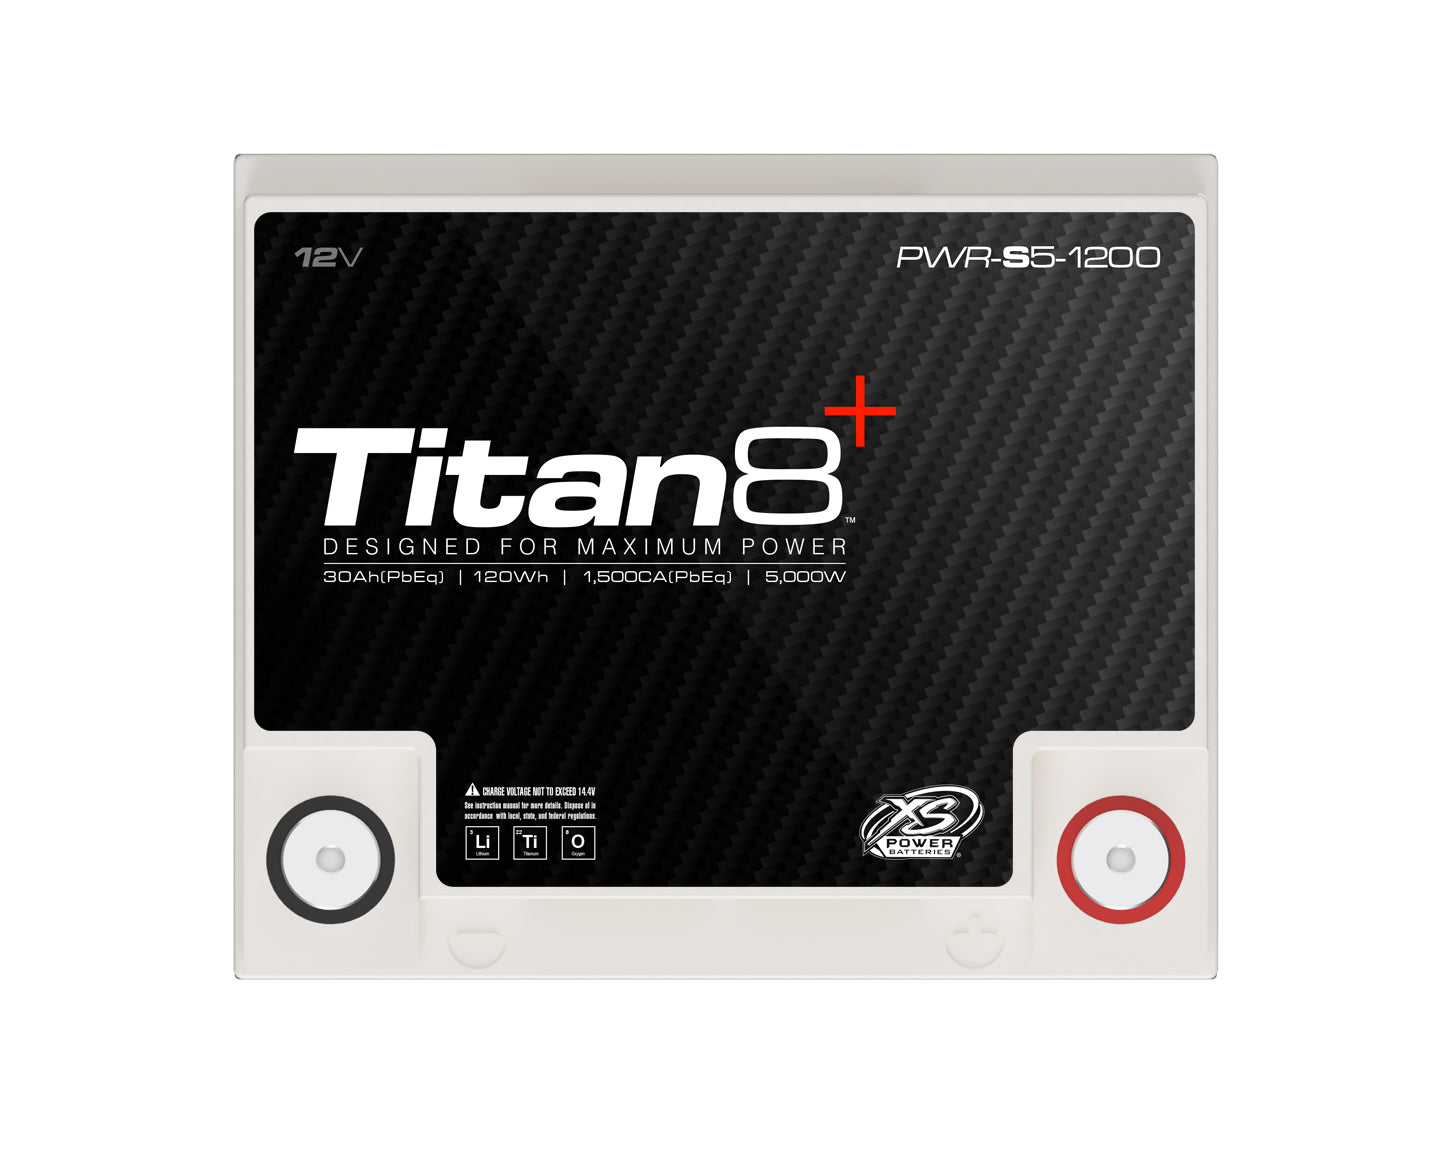 PWR-S5-1200 XS Power Titan8 12VDC Lithium LTO Car Audio Vehicle Battery 5000W 120Wh